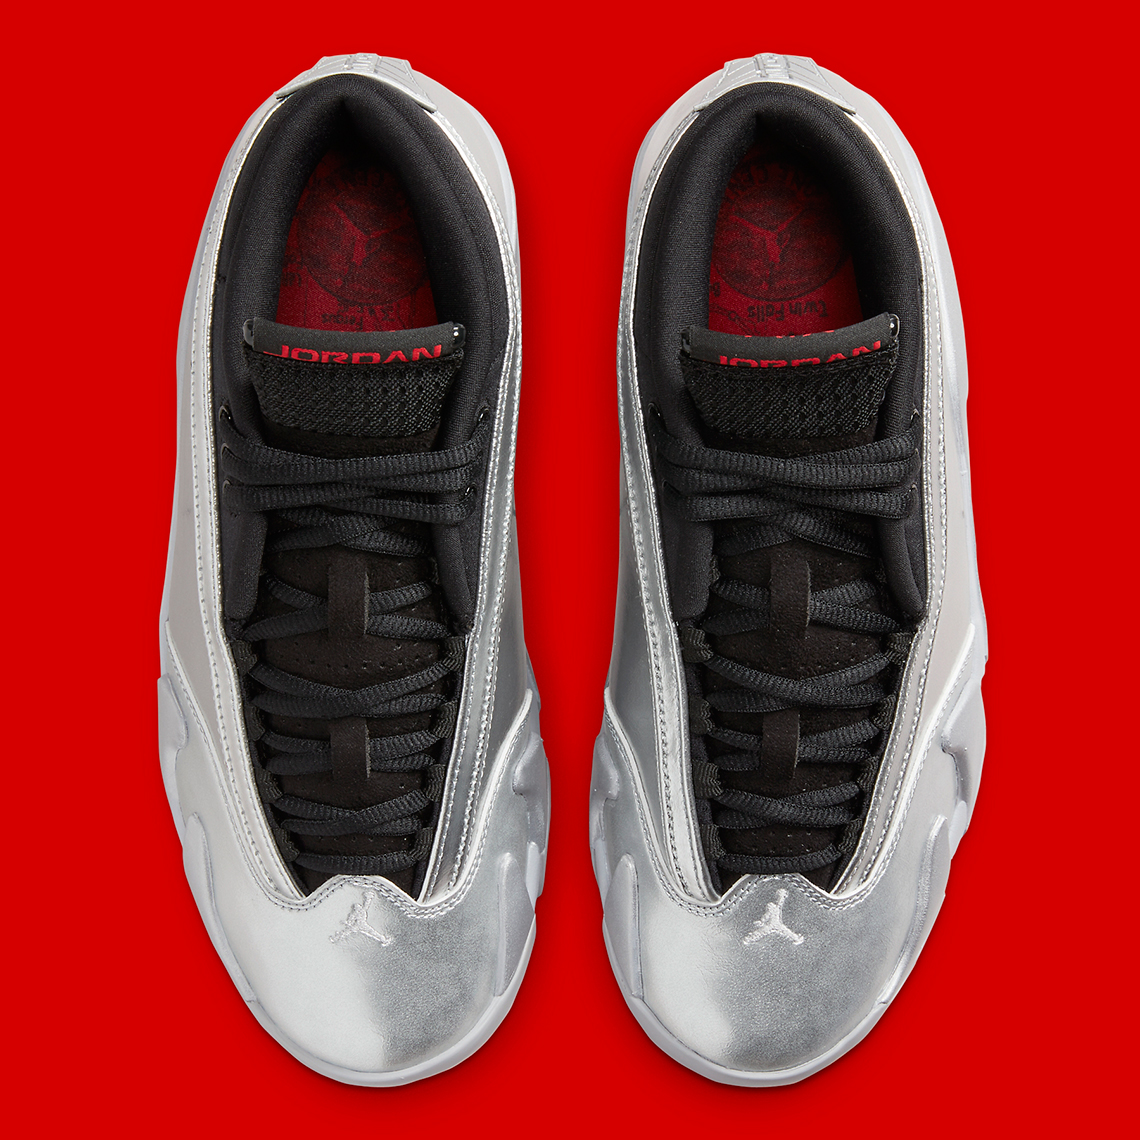 Tyga Poses in Travis Scotts Air Jordan Sneakers Low Metallic Silver Fire Red Wolf Grey Black Dh4121 060 3